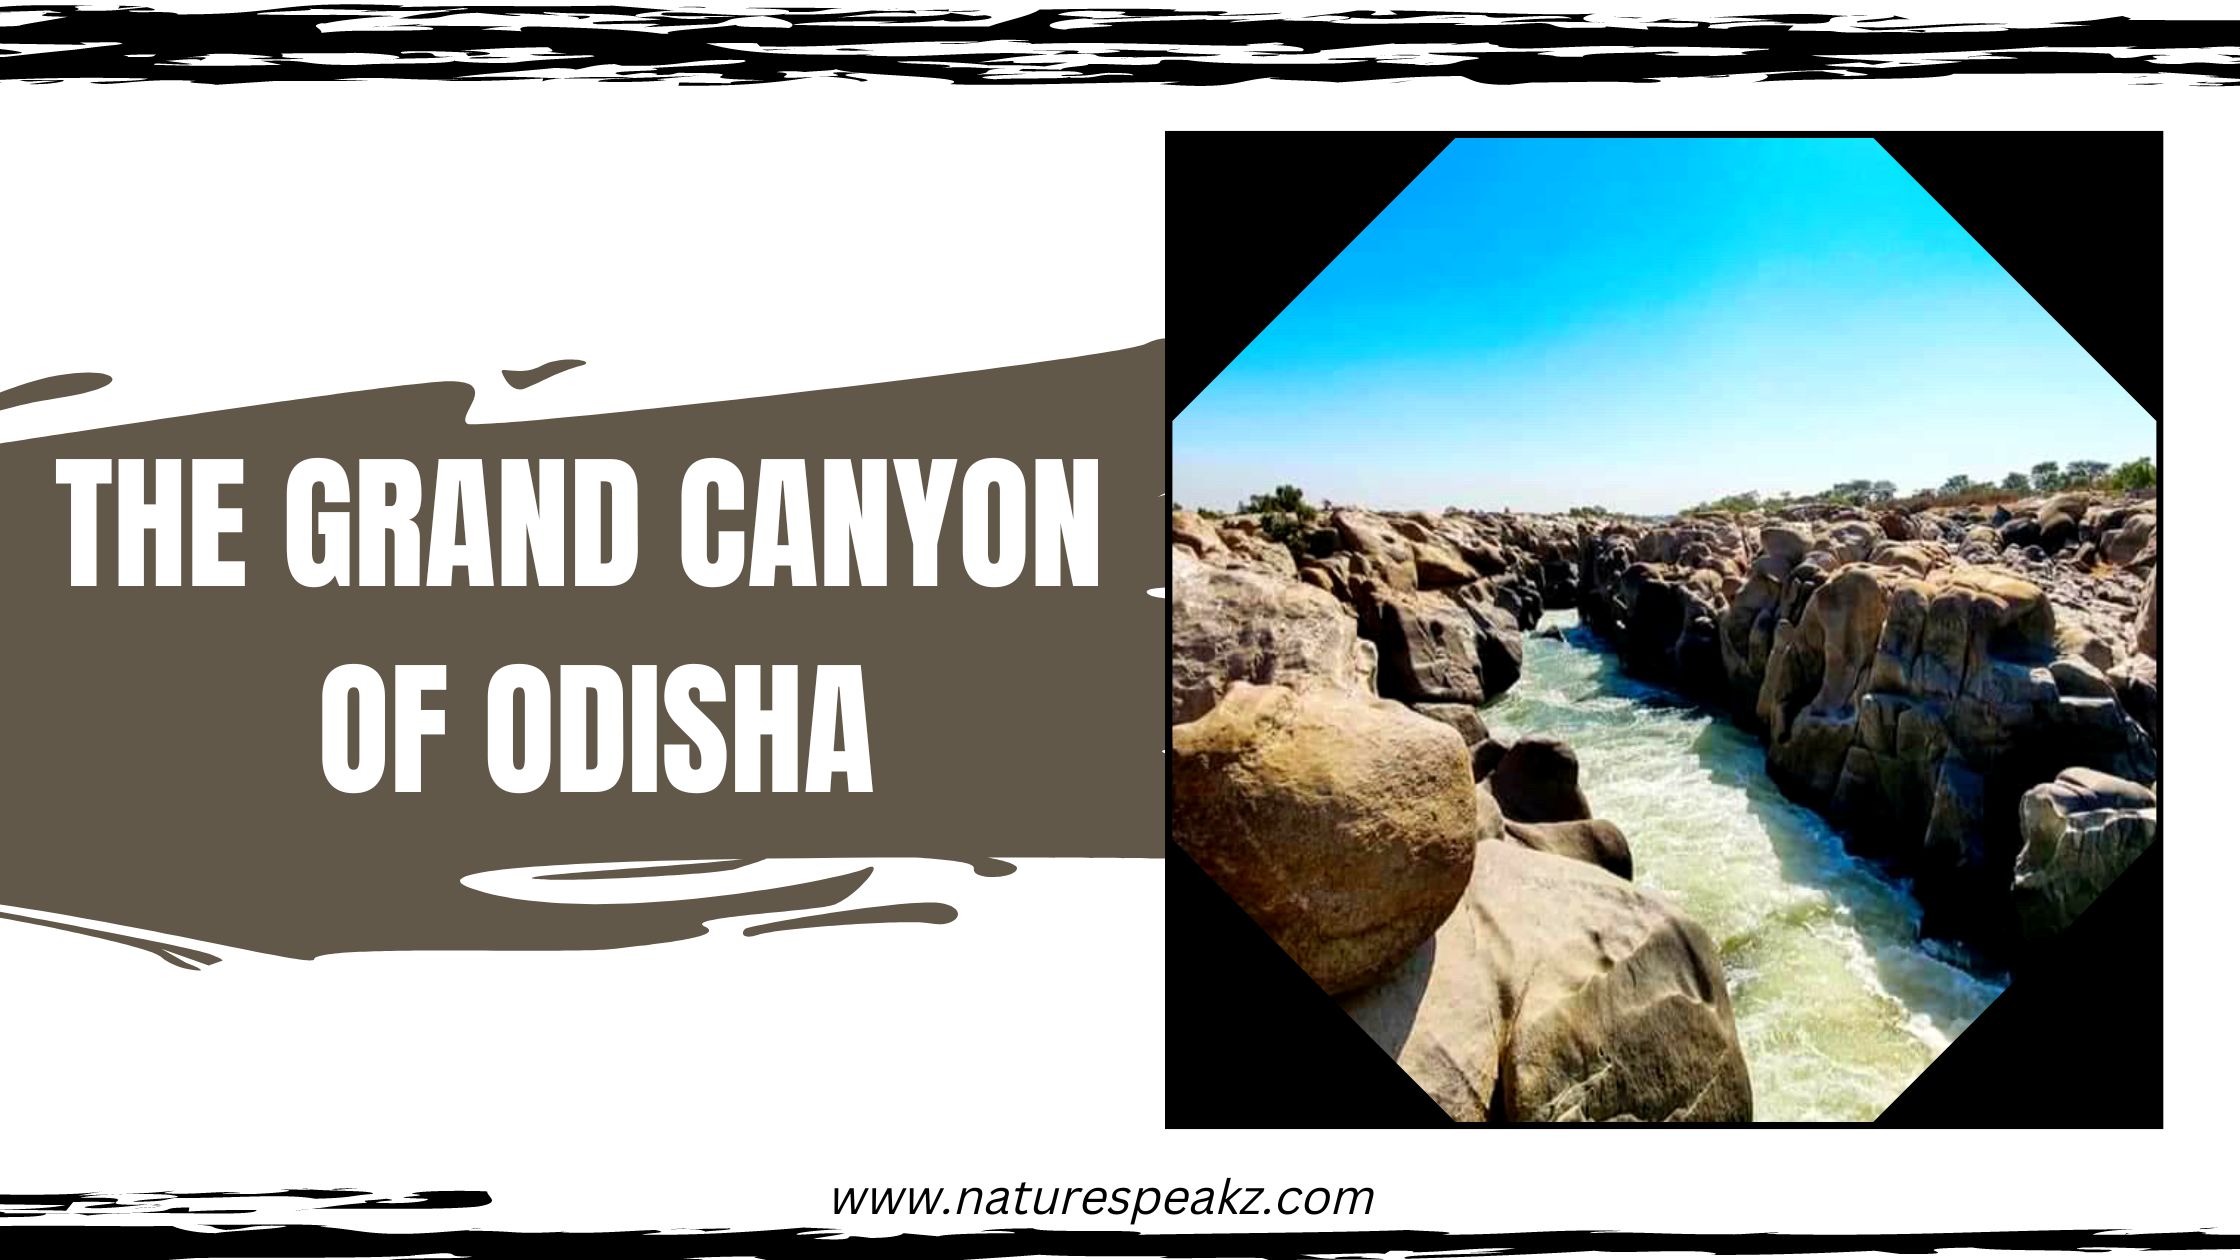 The Grand canyon of Odisha